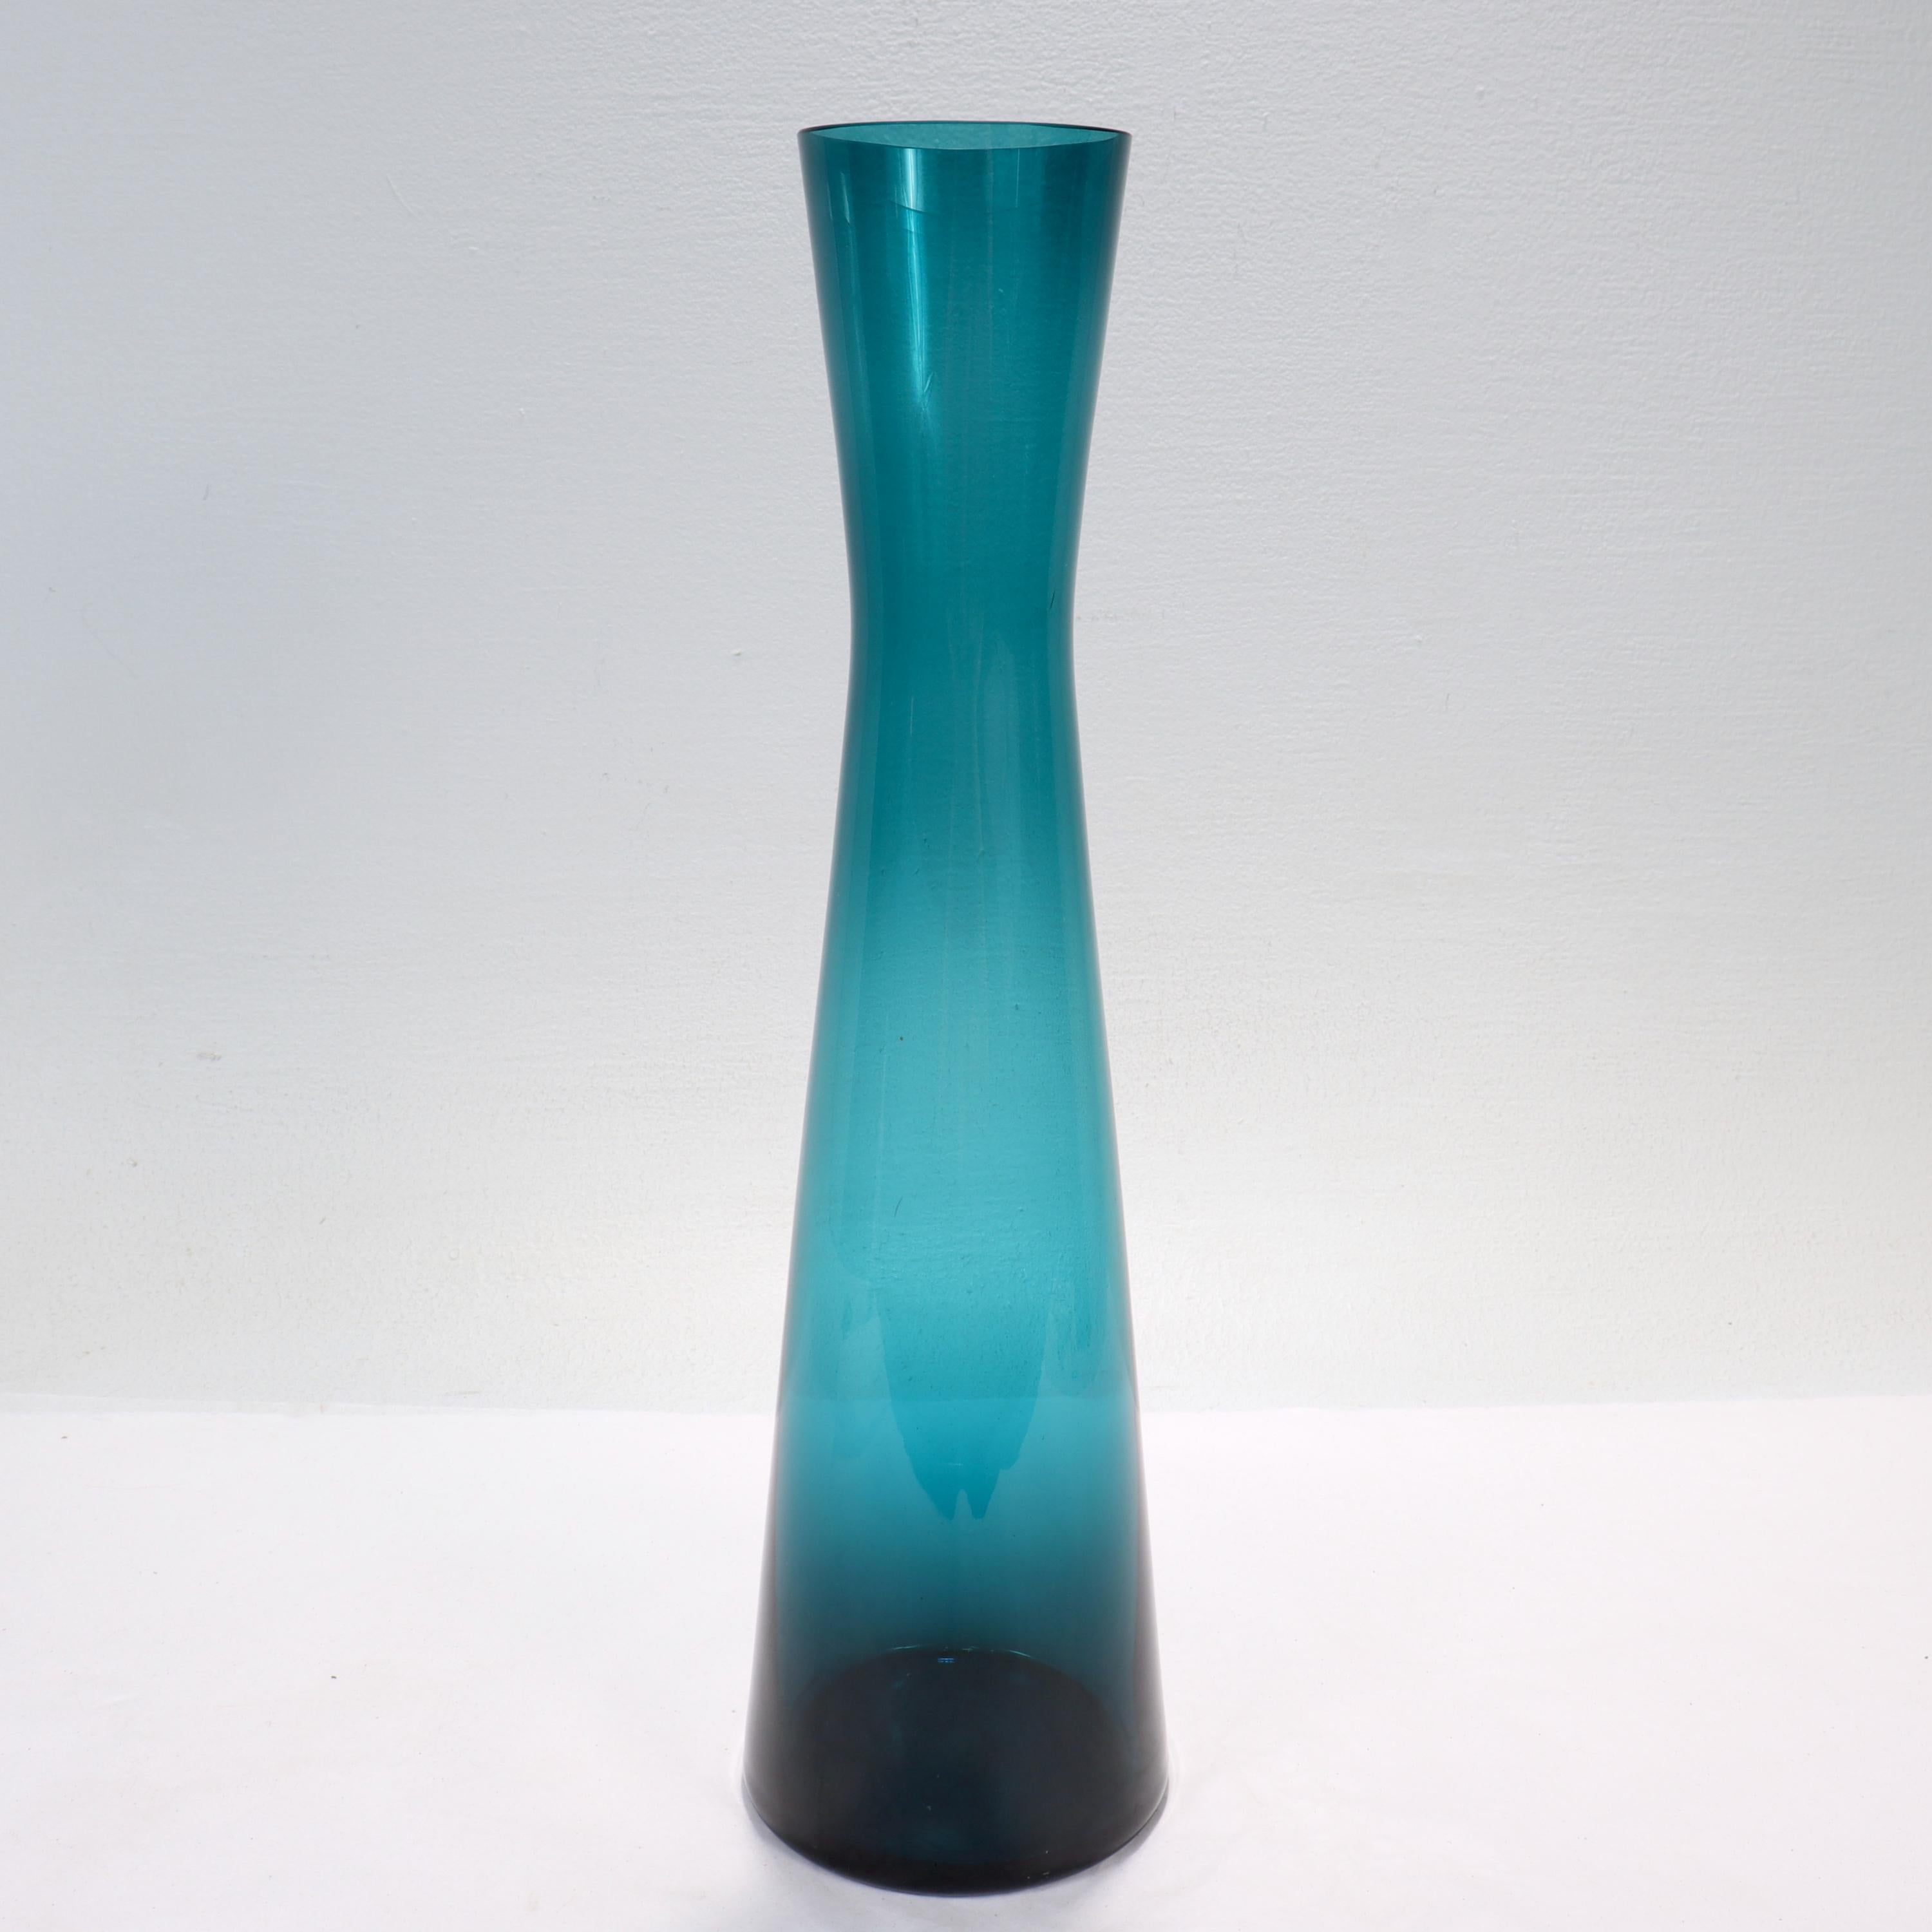 20th Century Mid-Century Modern Swedish Art Glass Vase Attributed to Gullaskruf For Sale